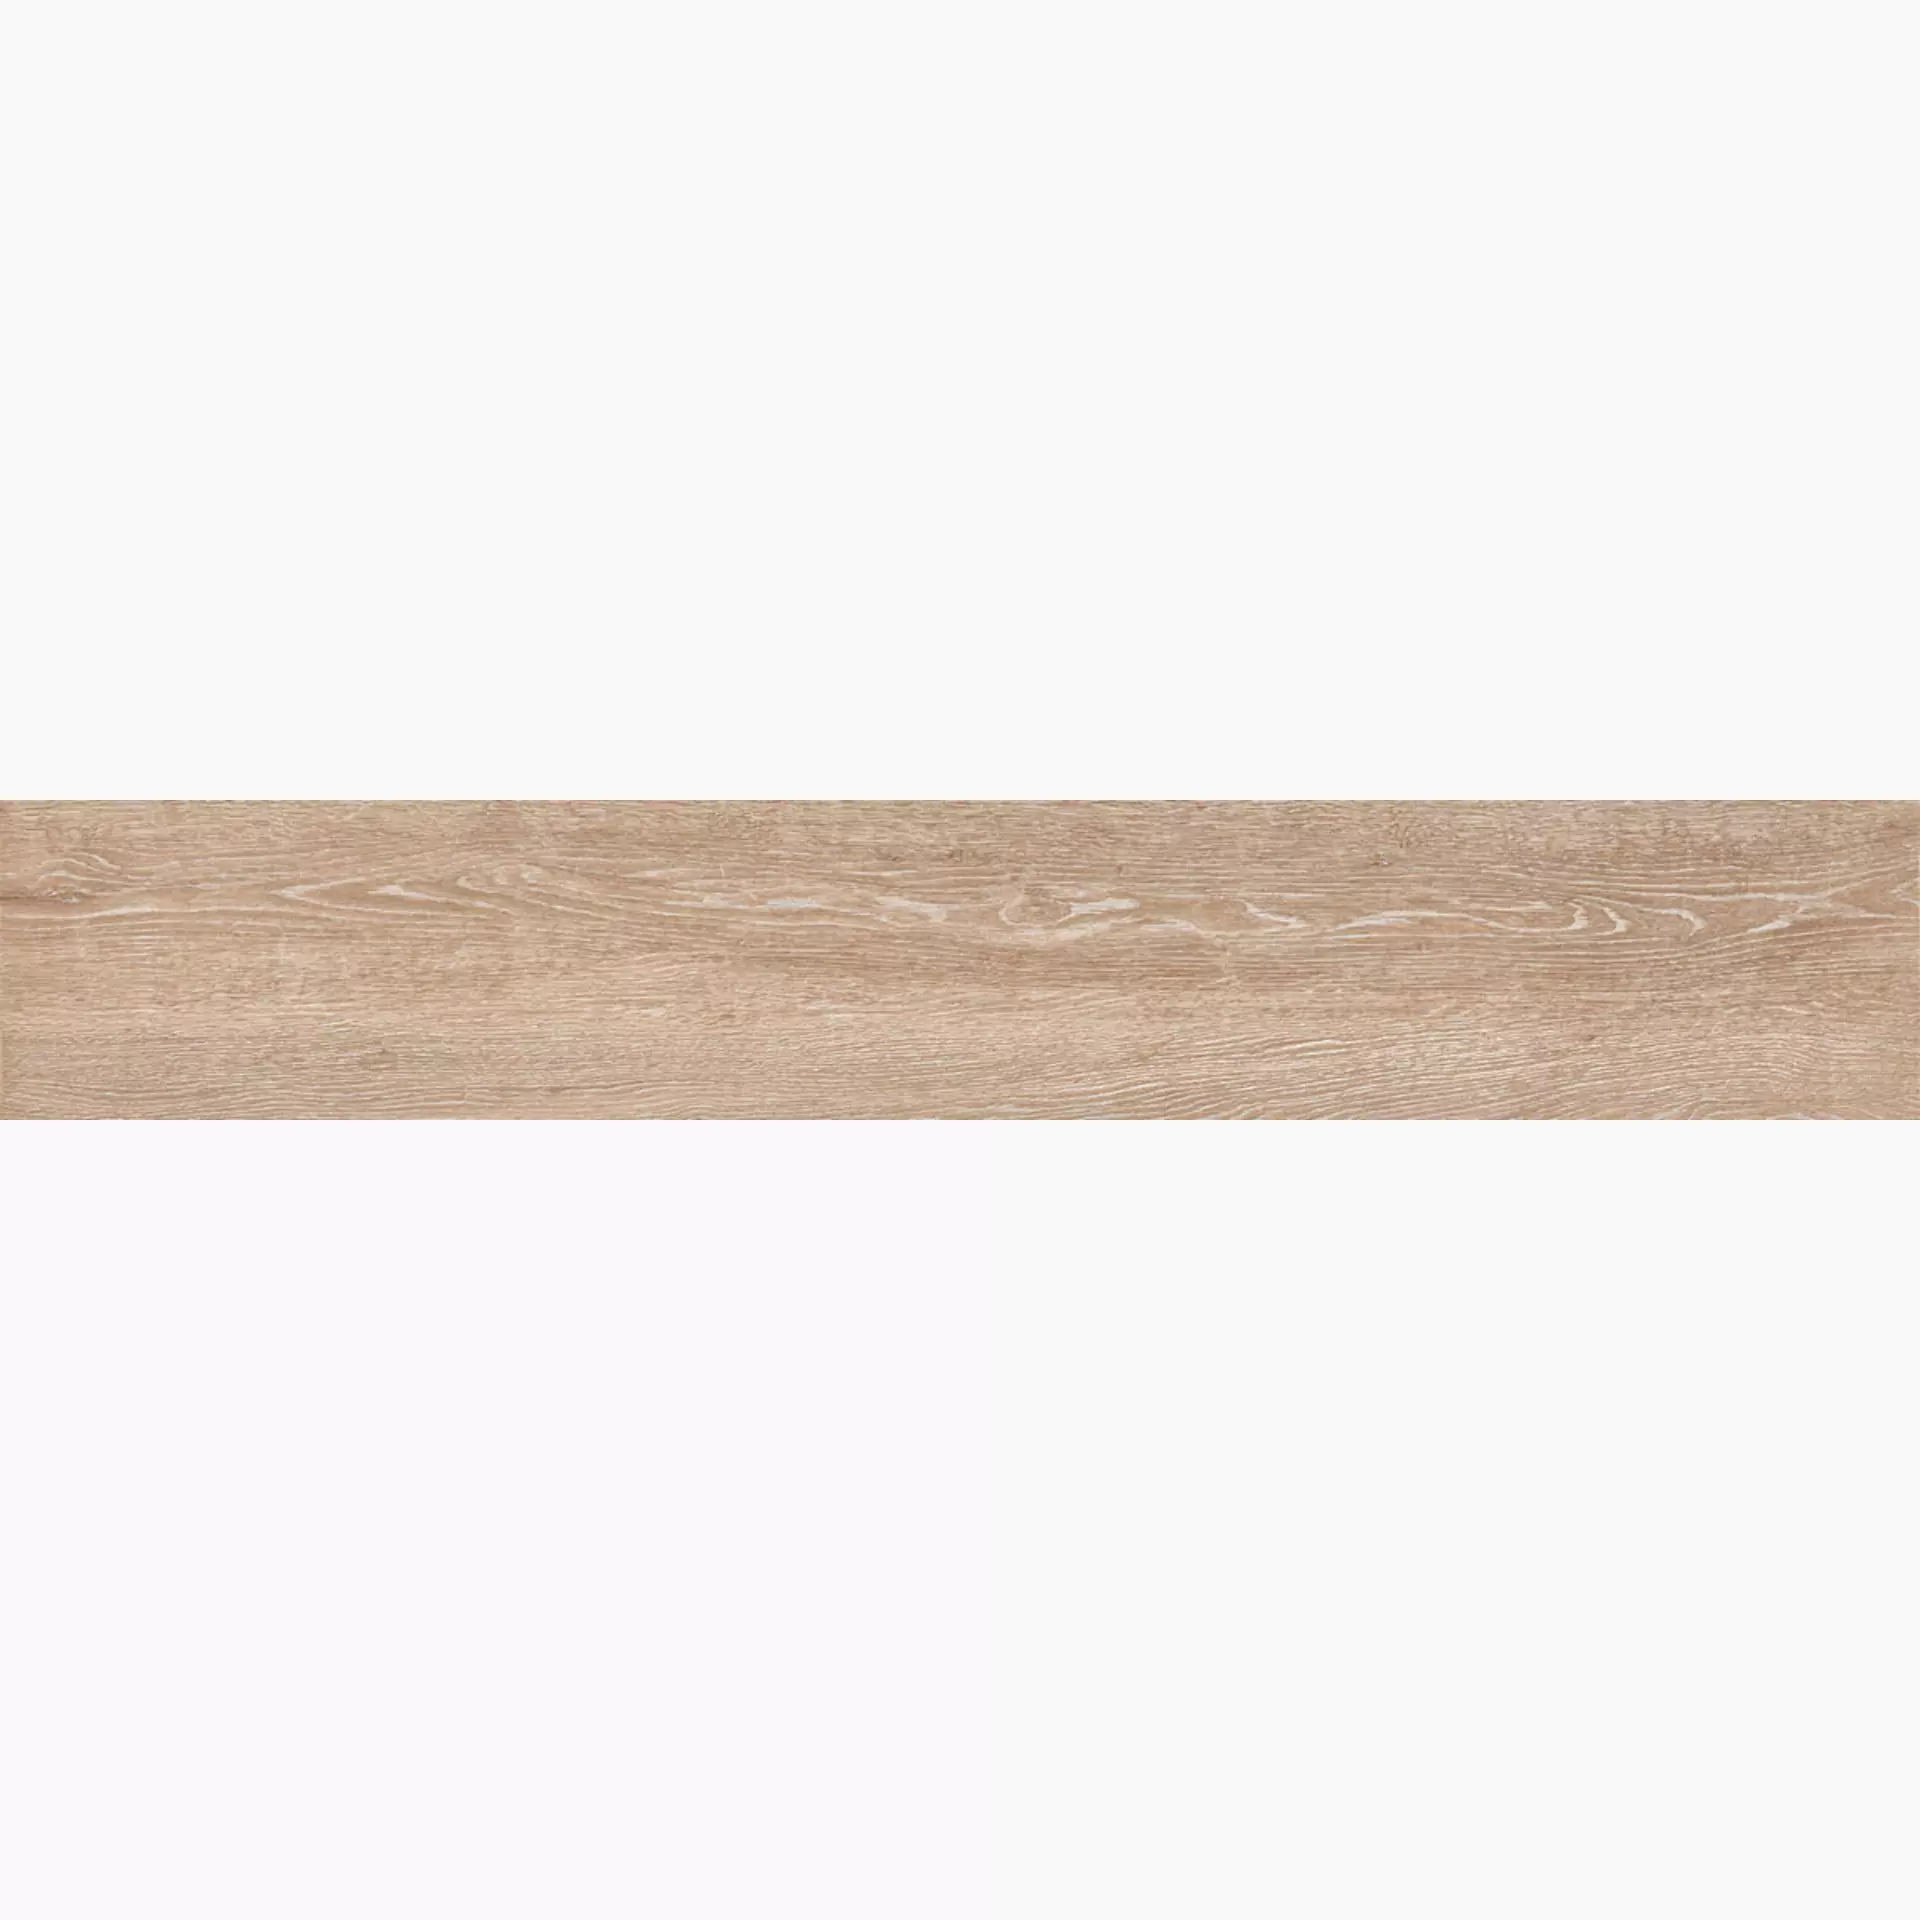 La Faenza Legno Dark Beige Natural Slate Cut Matt 168440 30x180cm rectified 10mm - LEGNO 3018BS RM